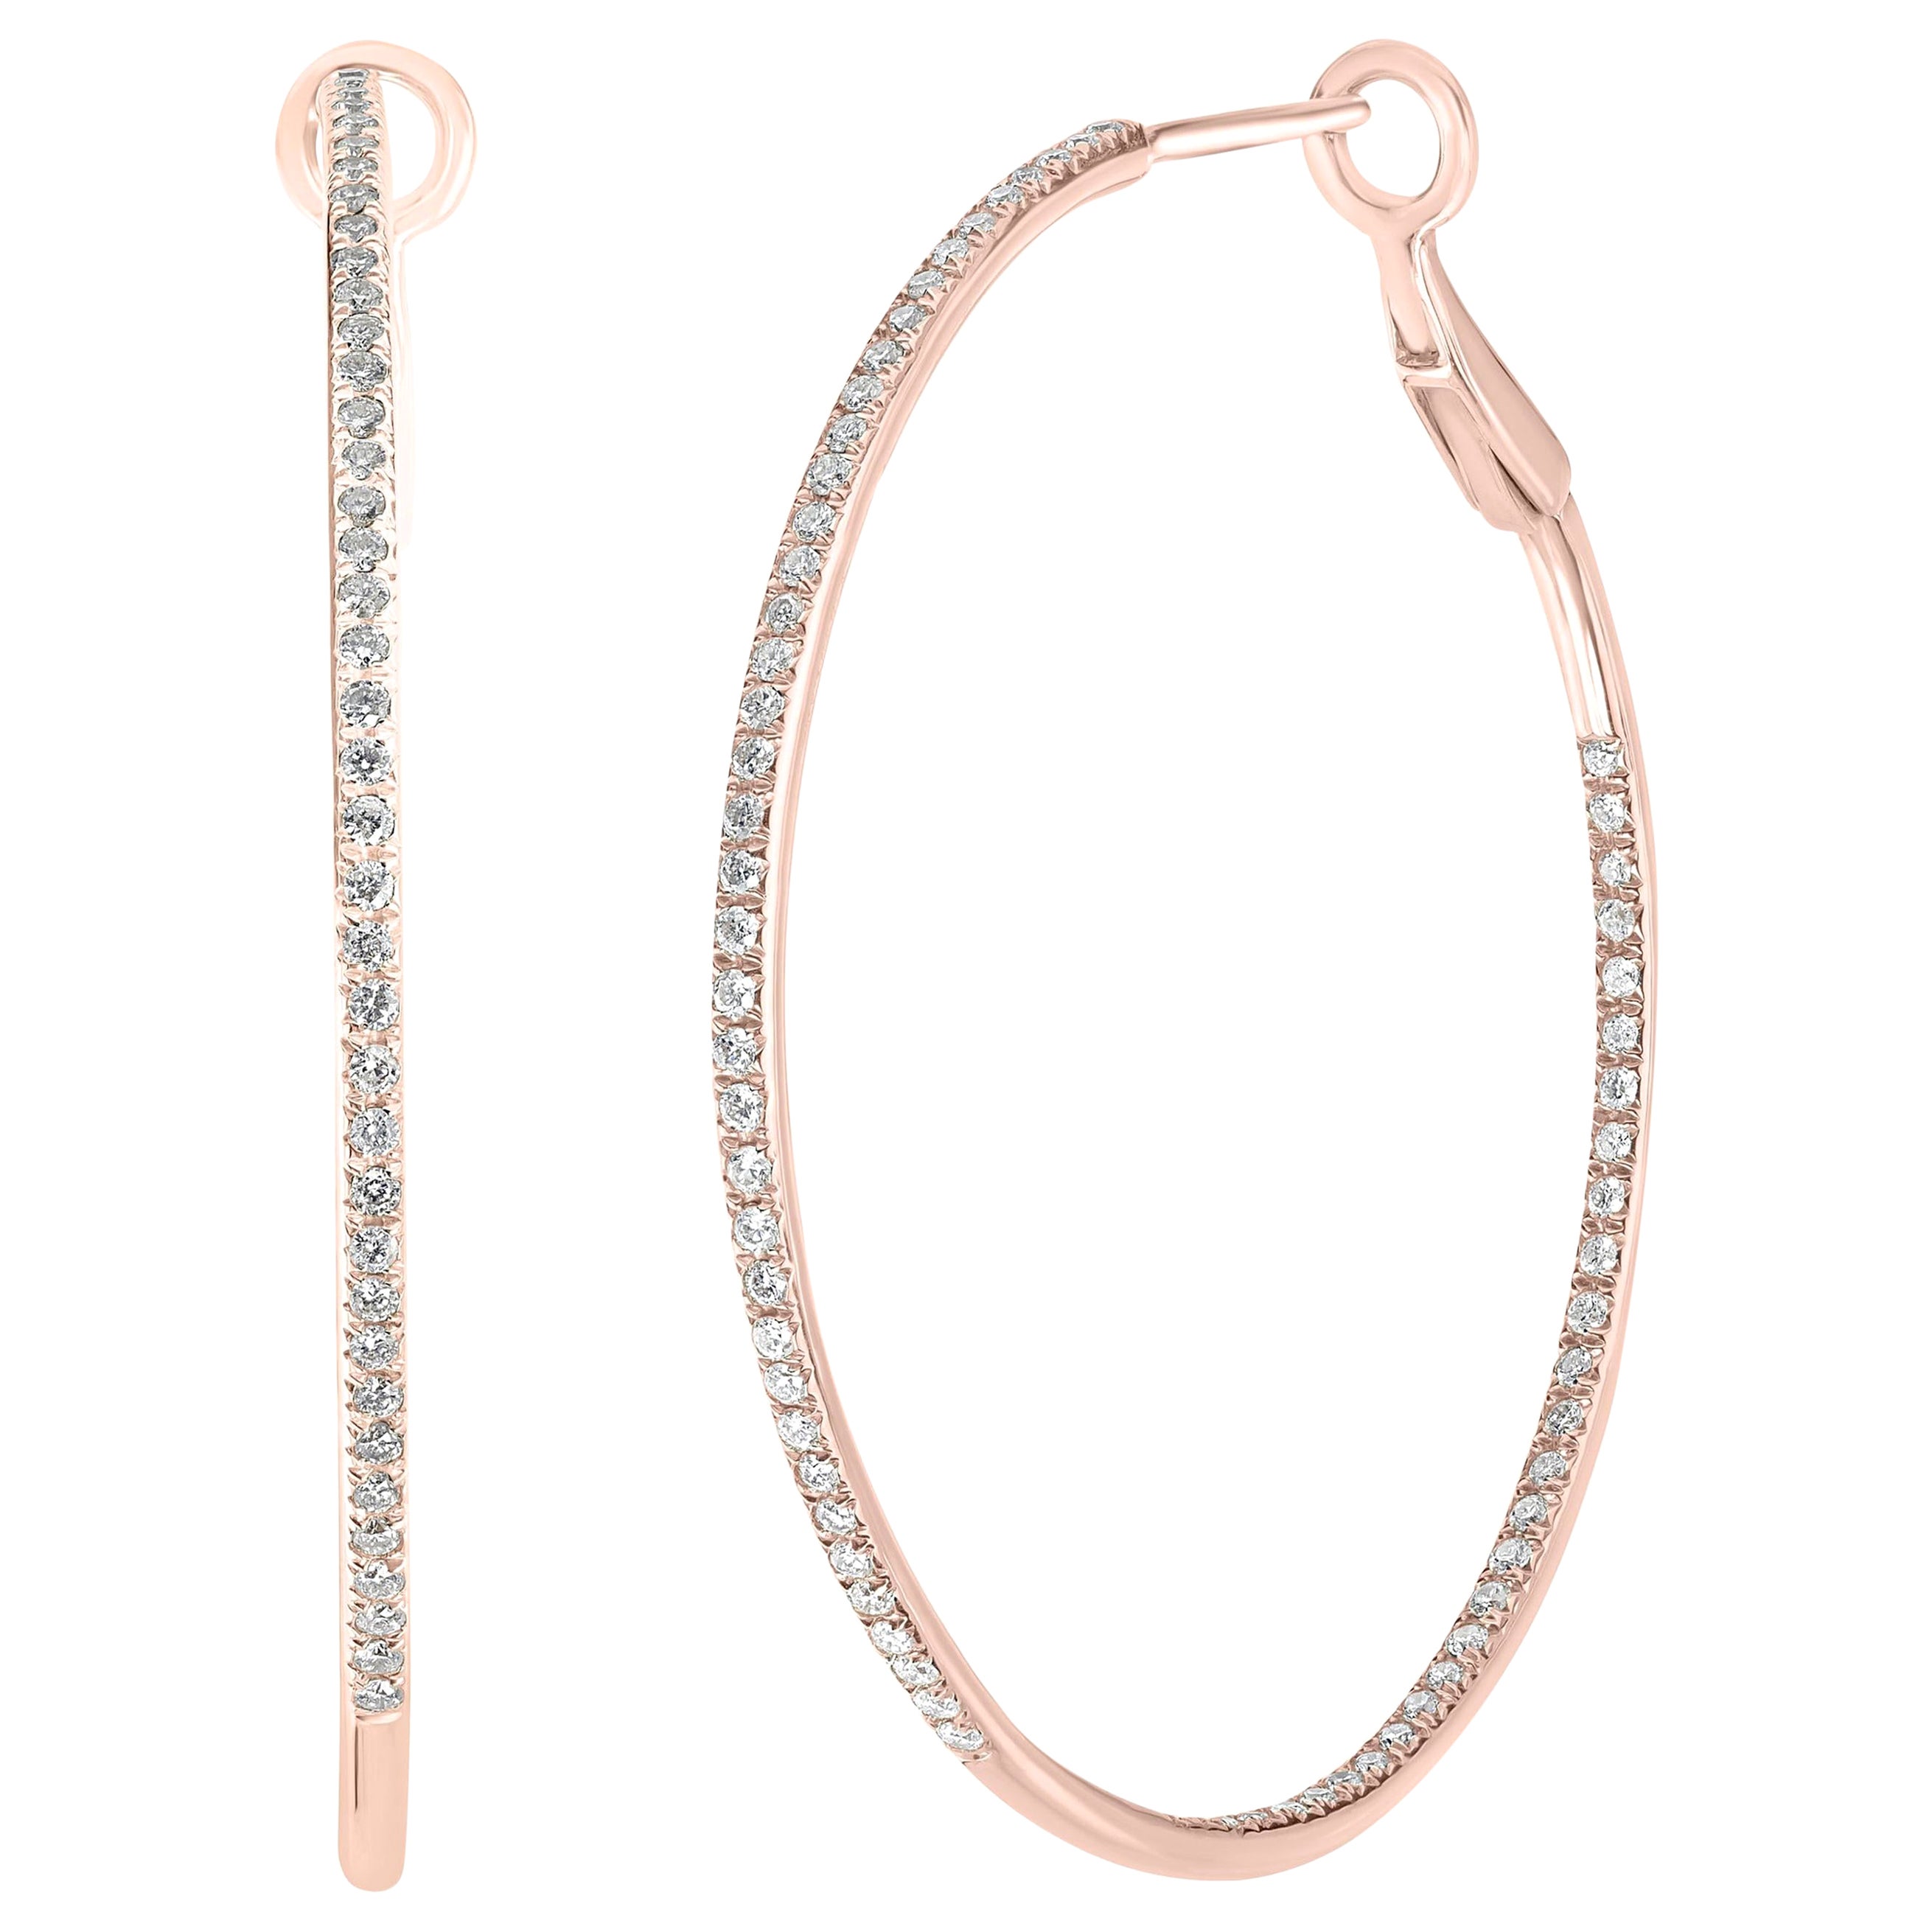 Luxle 0.73cttw Round Single Cut Diamond Hoop Earrings in 14k Rose Gold